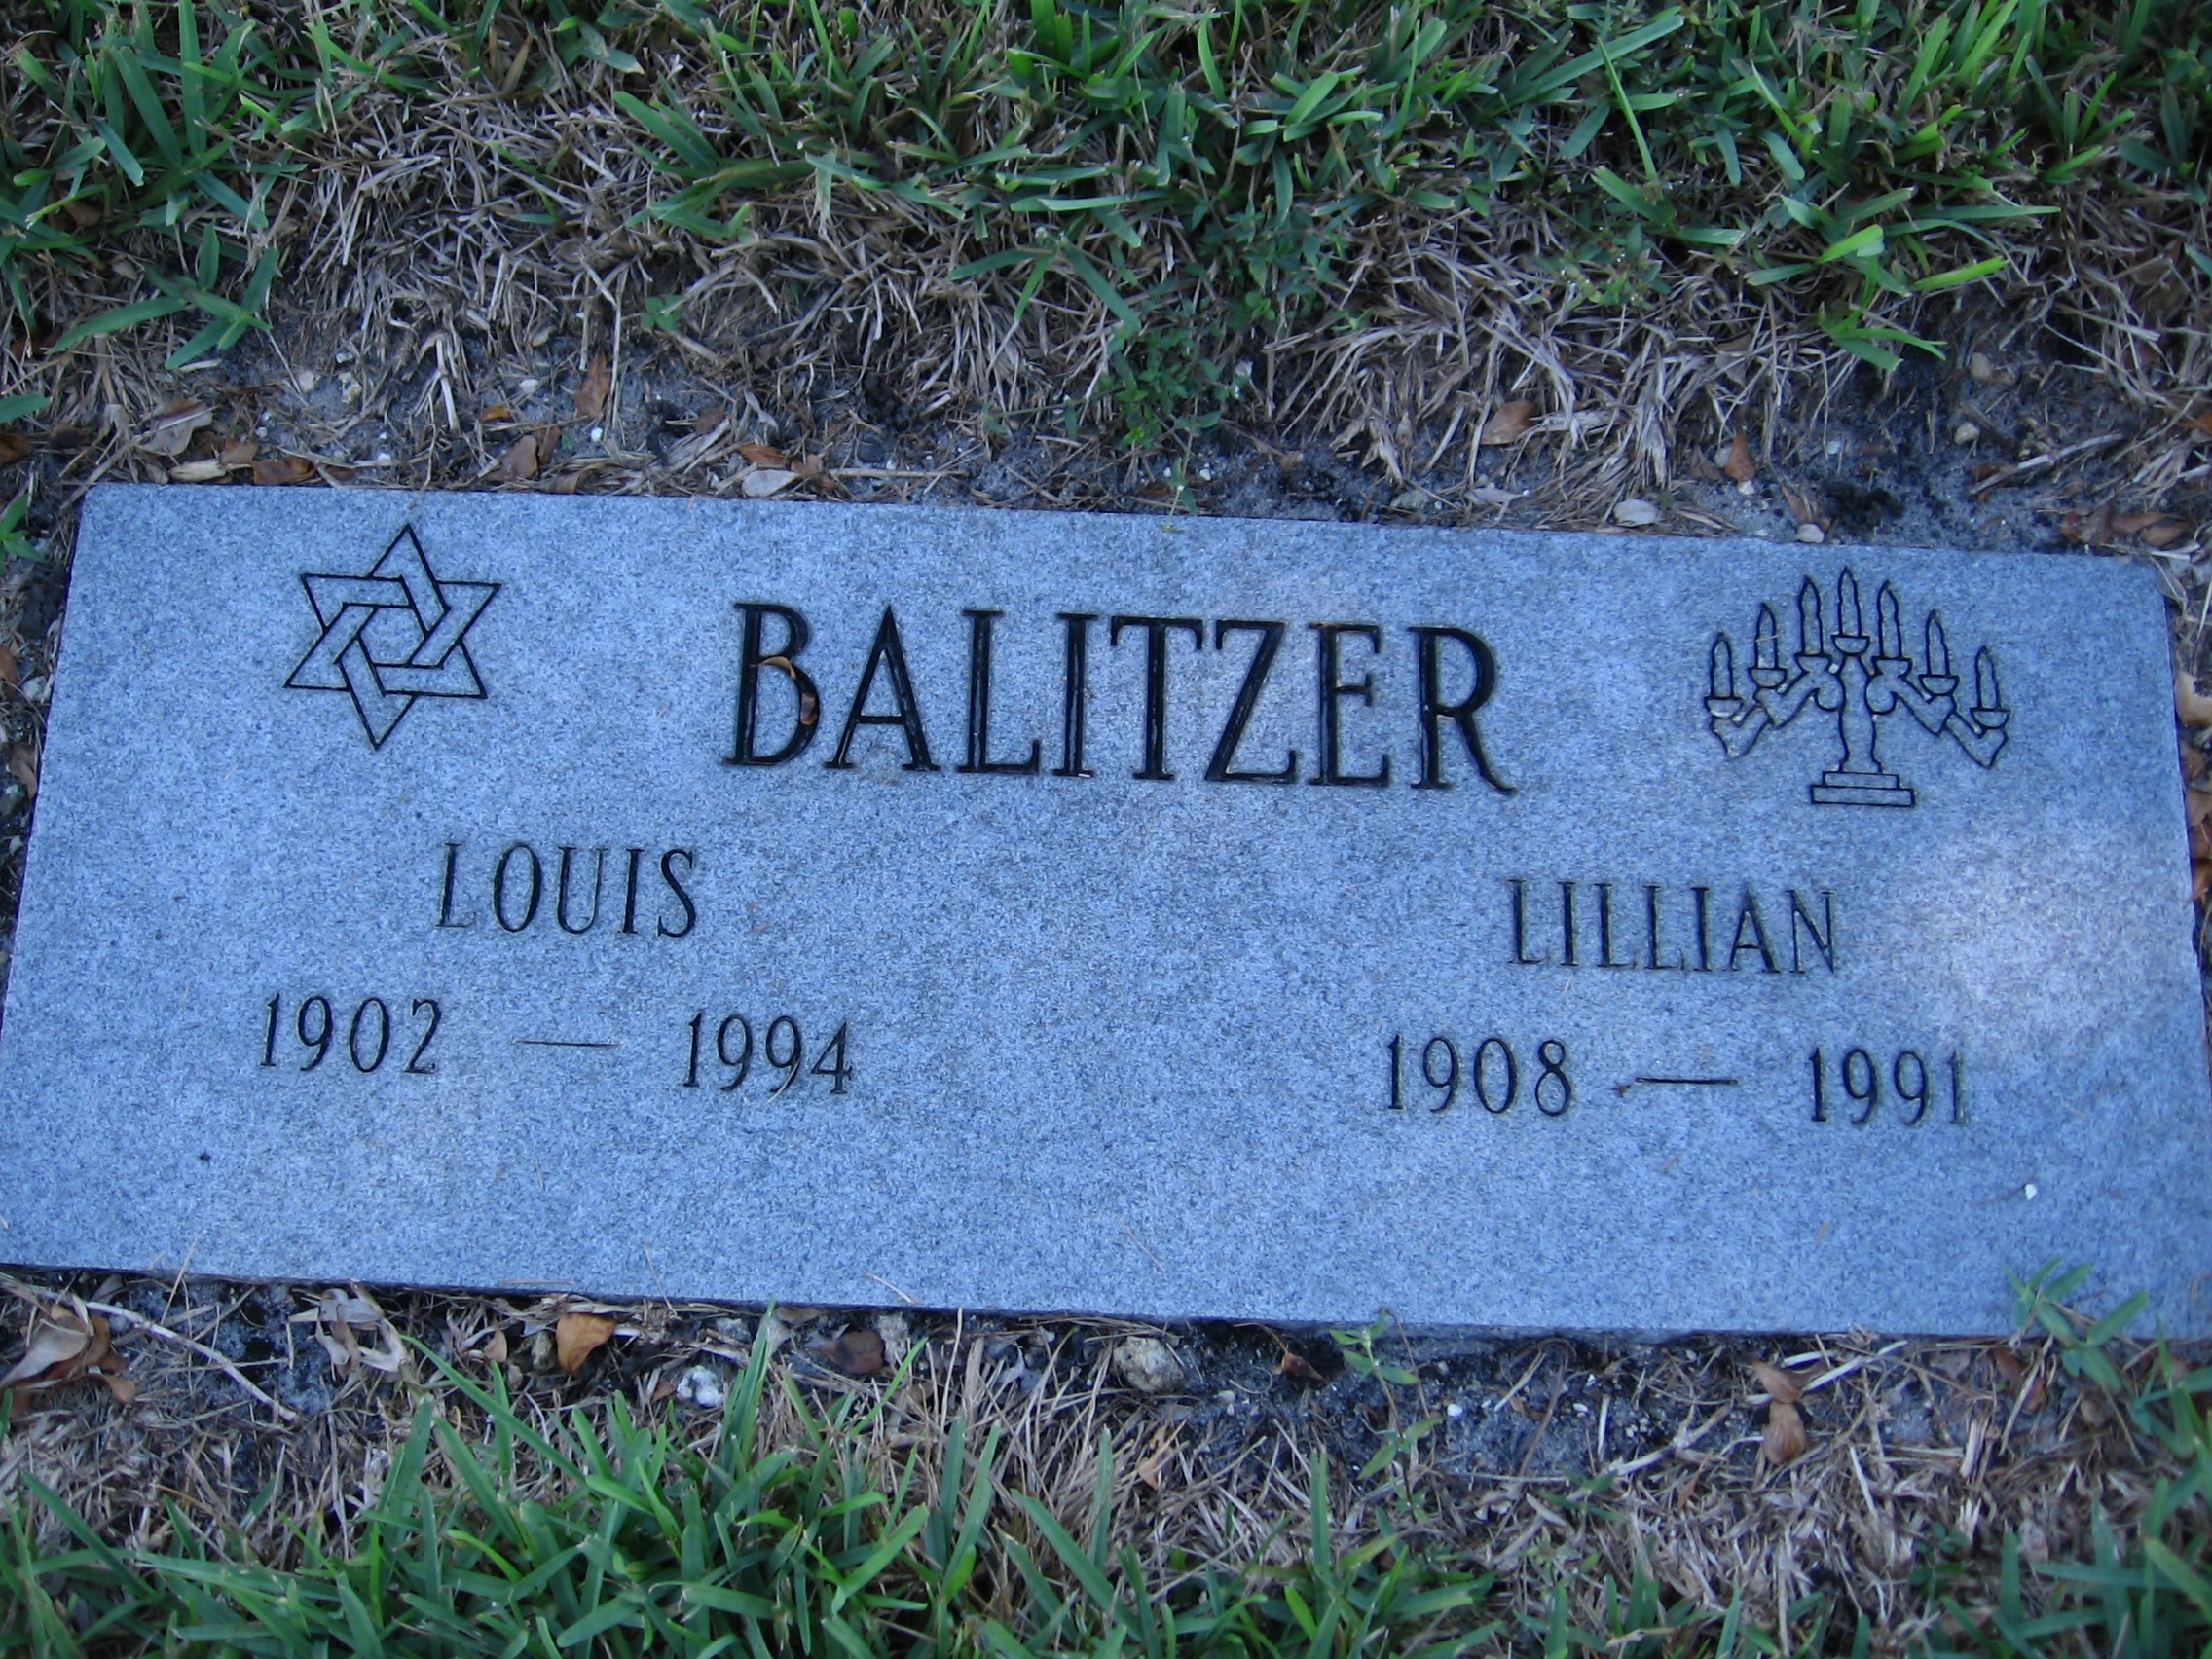 Louis Balitzer